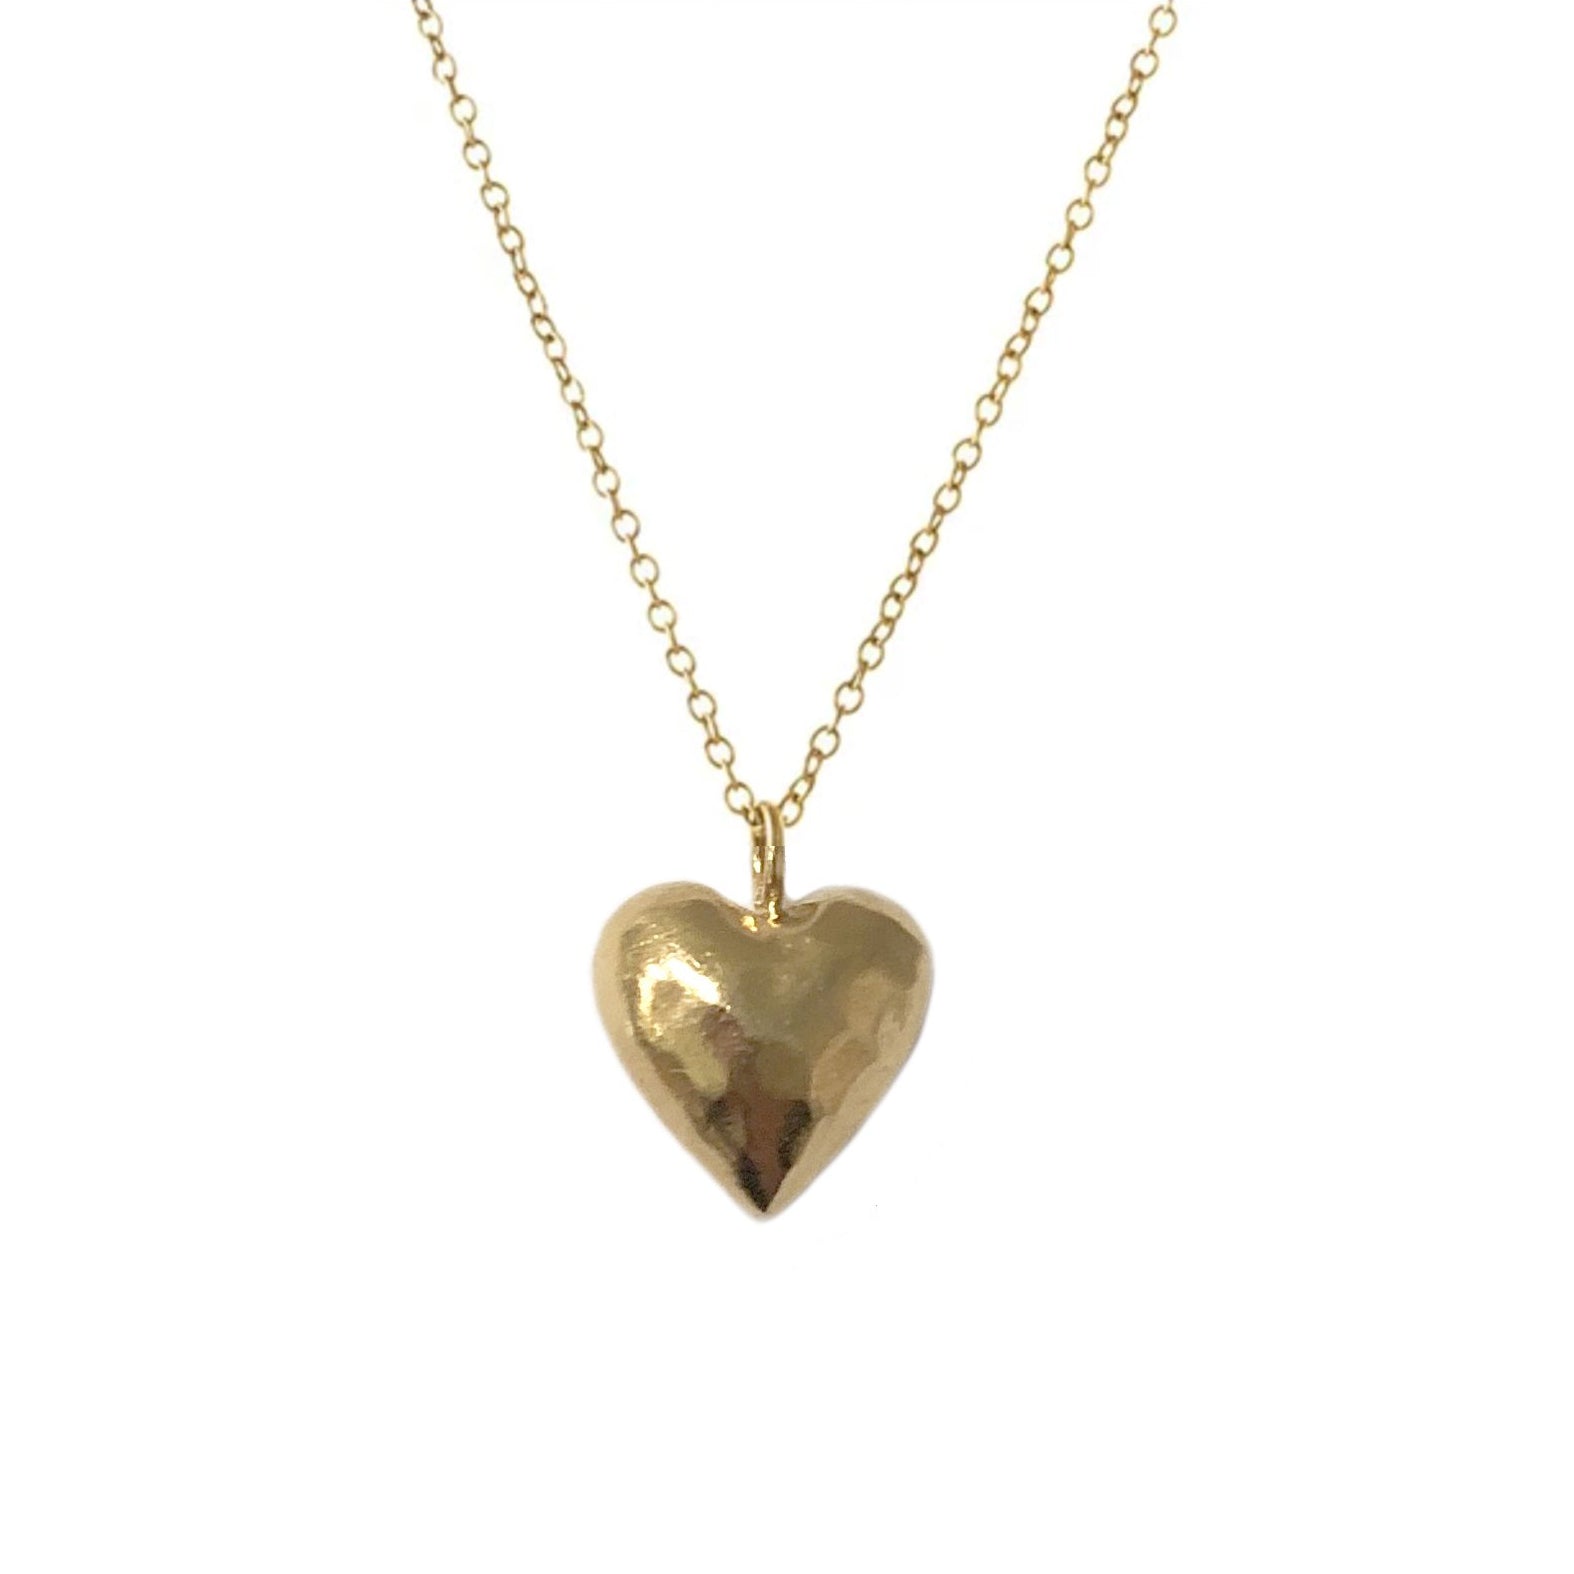 Puffy Heart Necklace | Puffy heart necklace, Puffy heart, Puffy heart charms